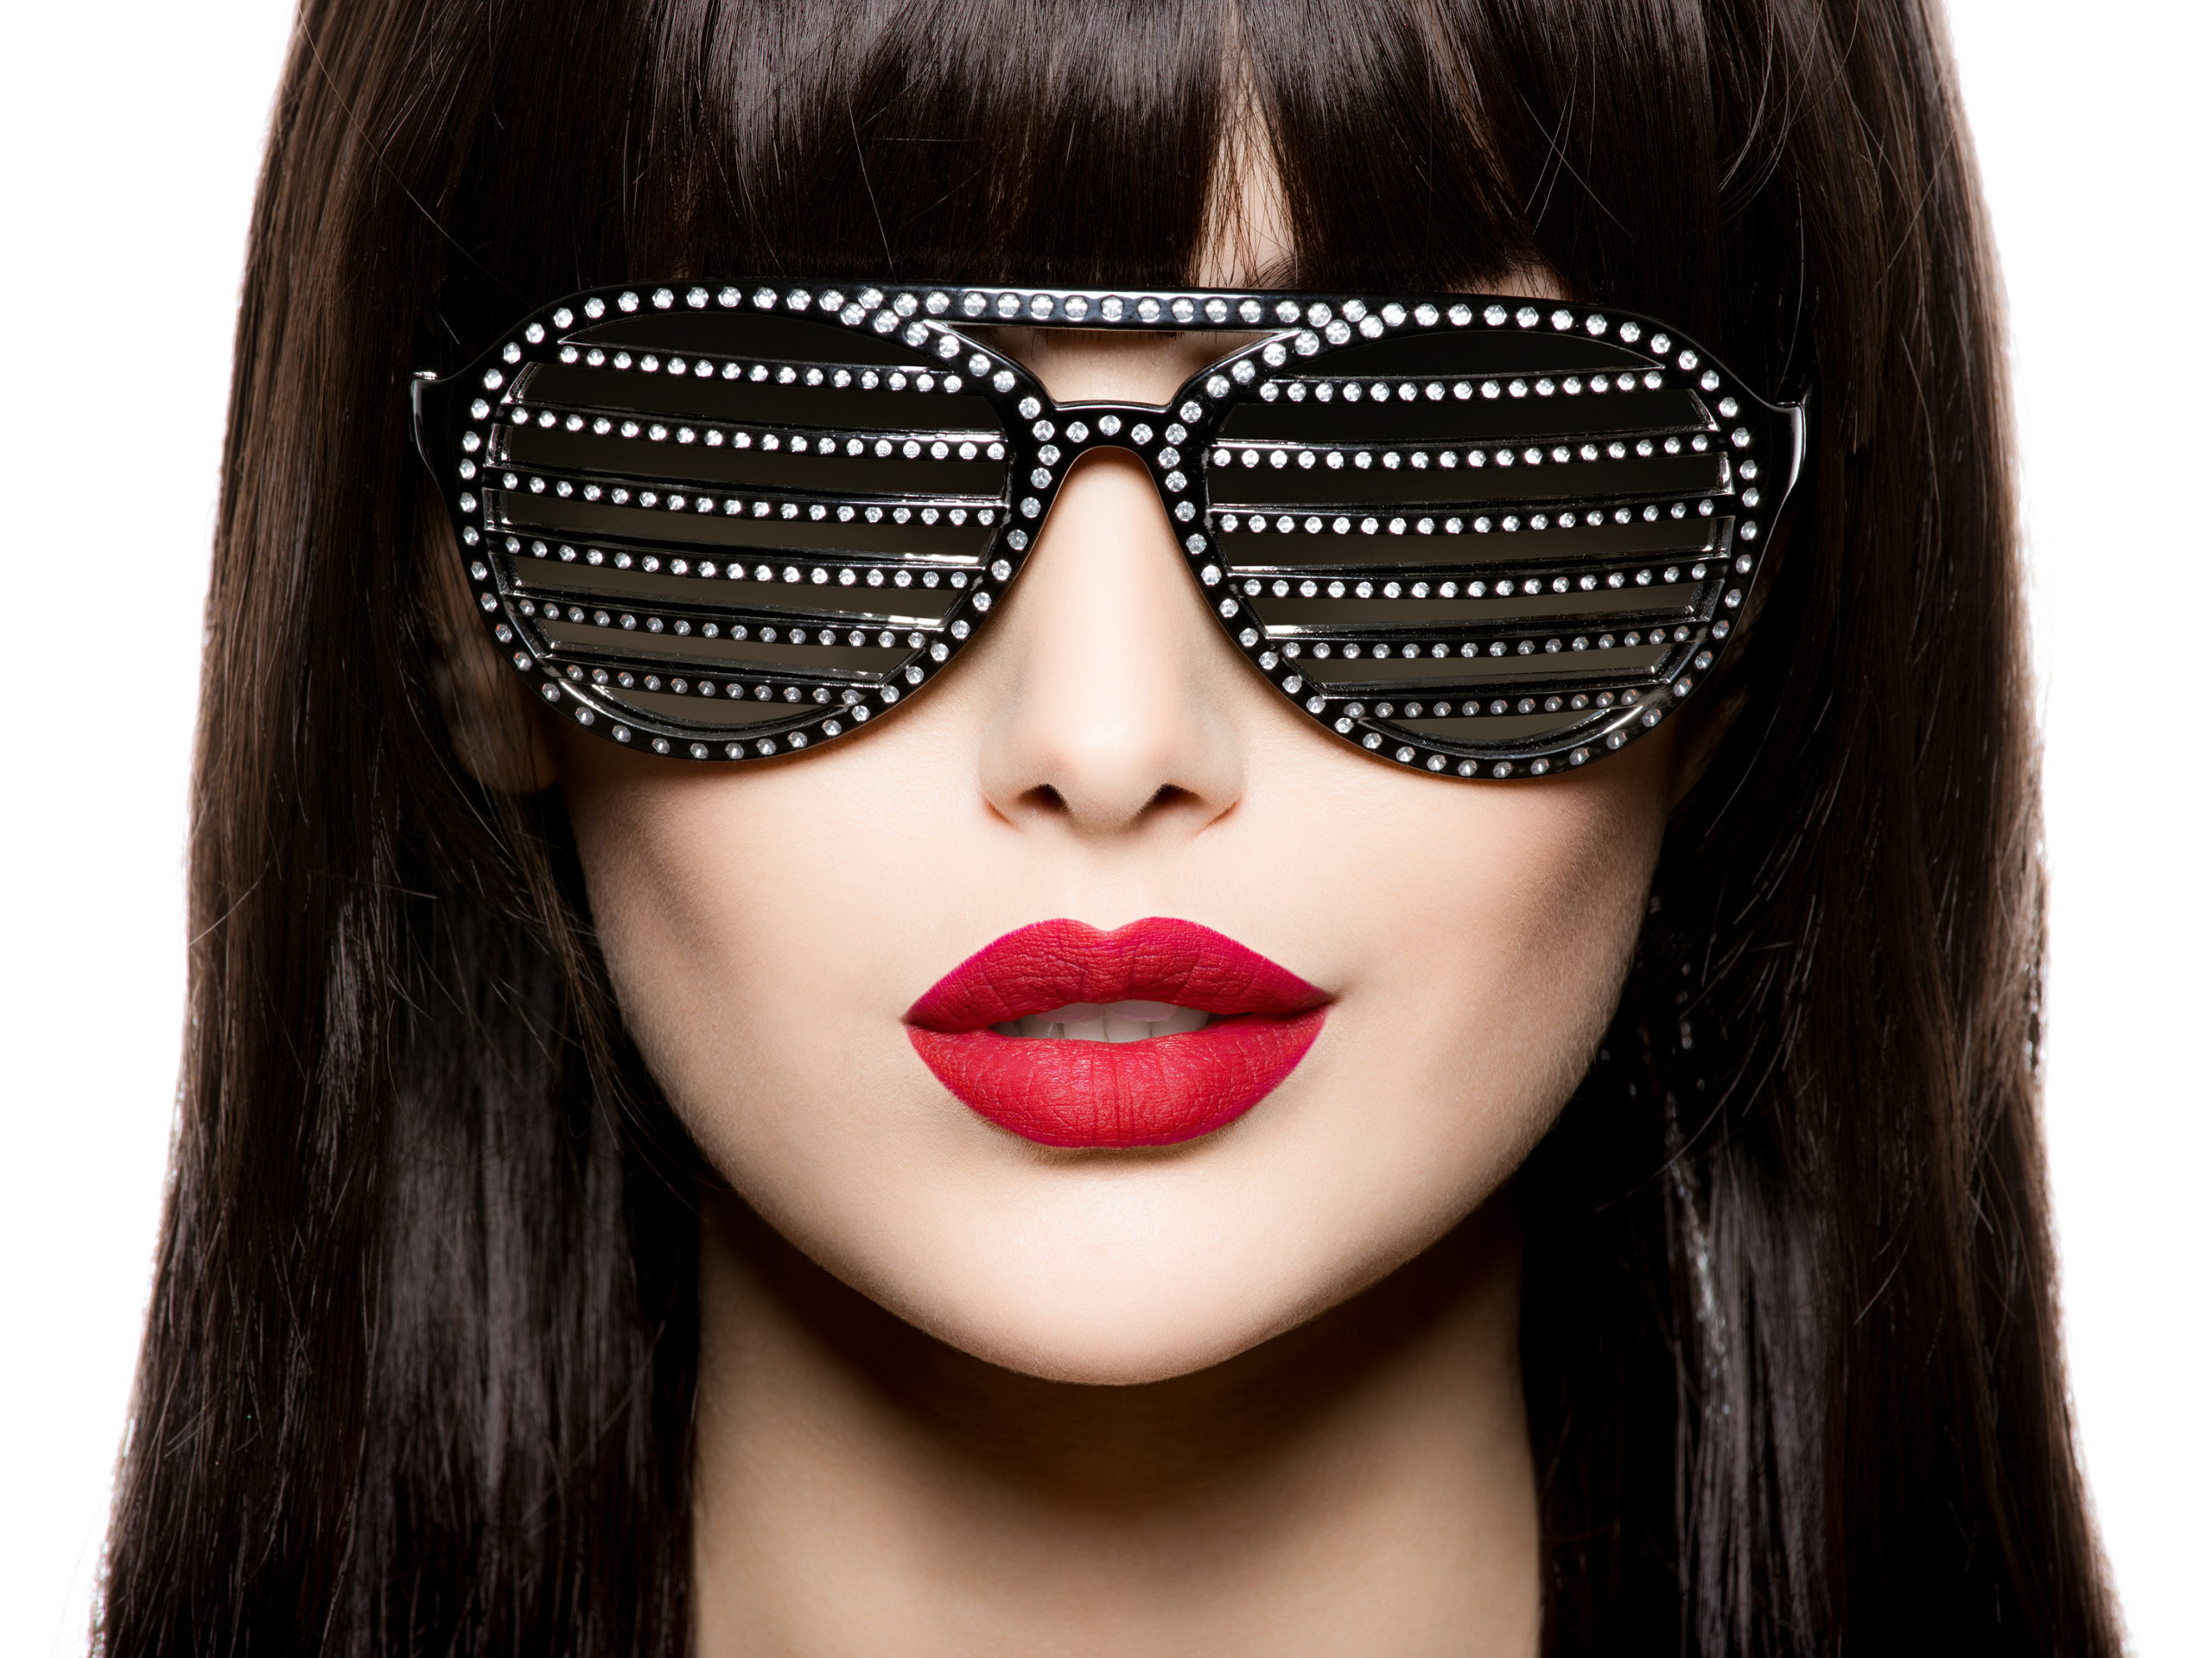 //www.secretdiarygirls.com/wp-content/uploads/2022/02/fashion-portrait-woman-wearing-black-sunglasses-with-diamonds-red-lips-scaled.jpg